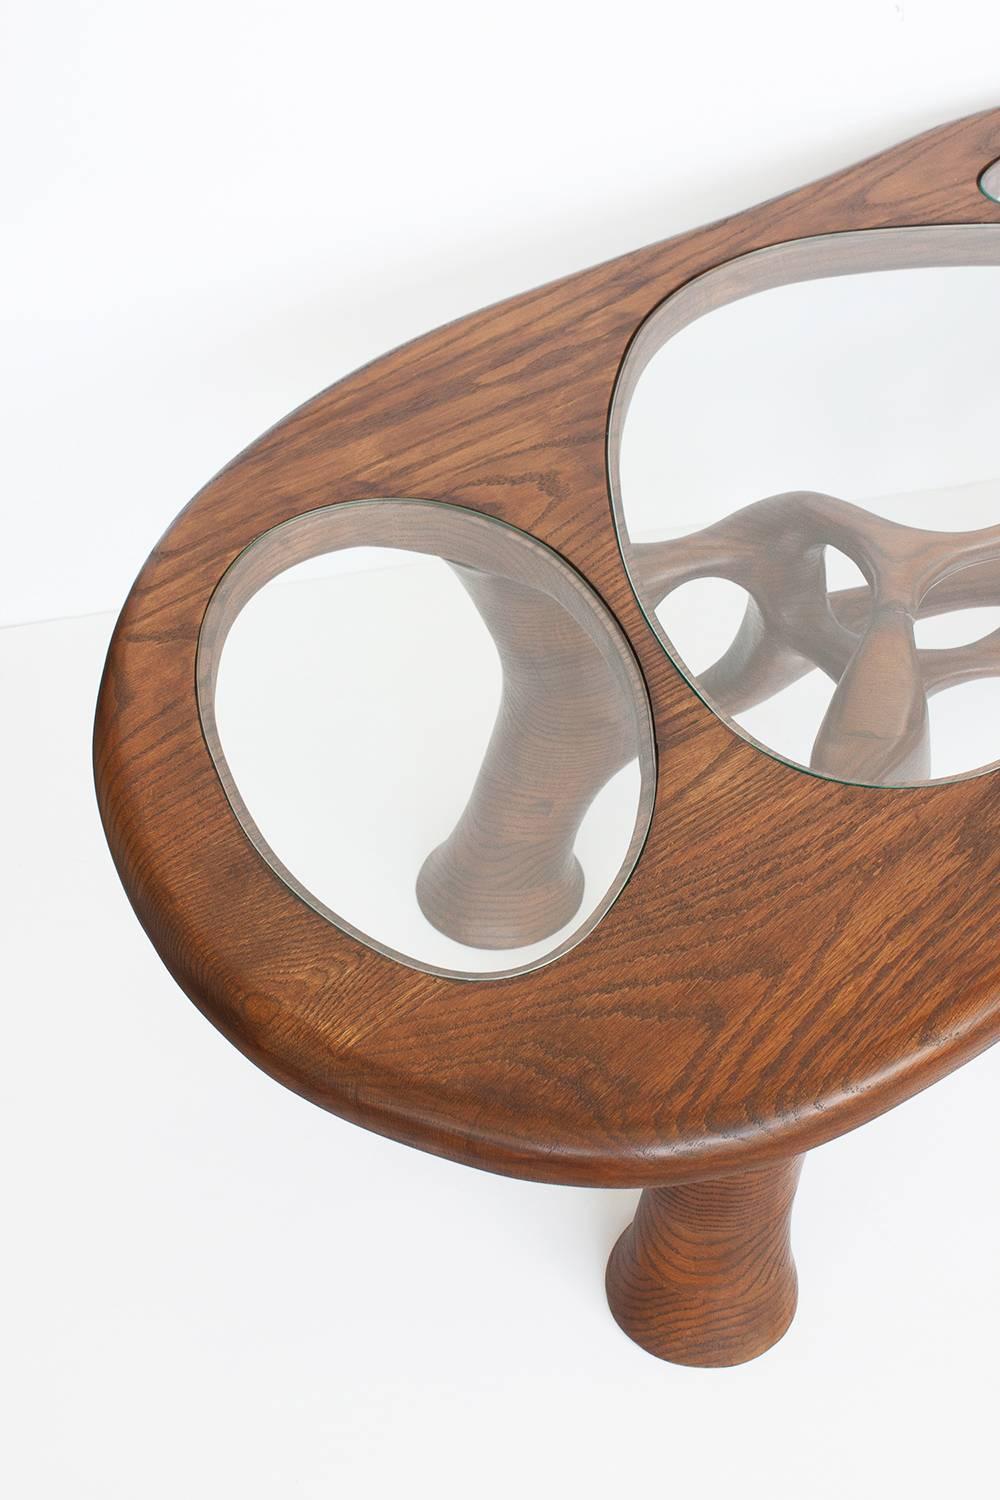 Late 20th Century Craig Lauterbach Freeform Sculptural Coffee Table